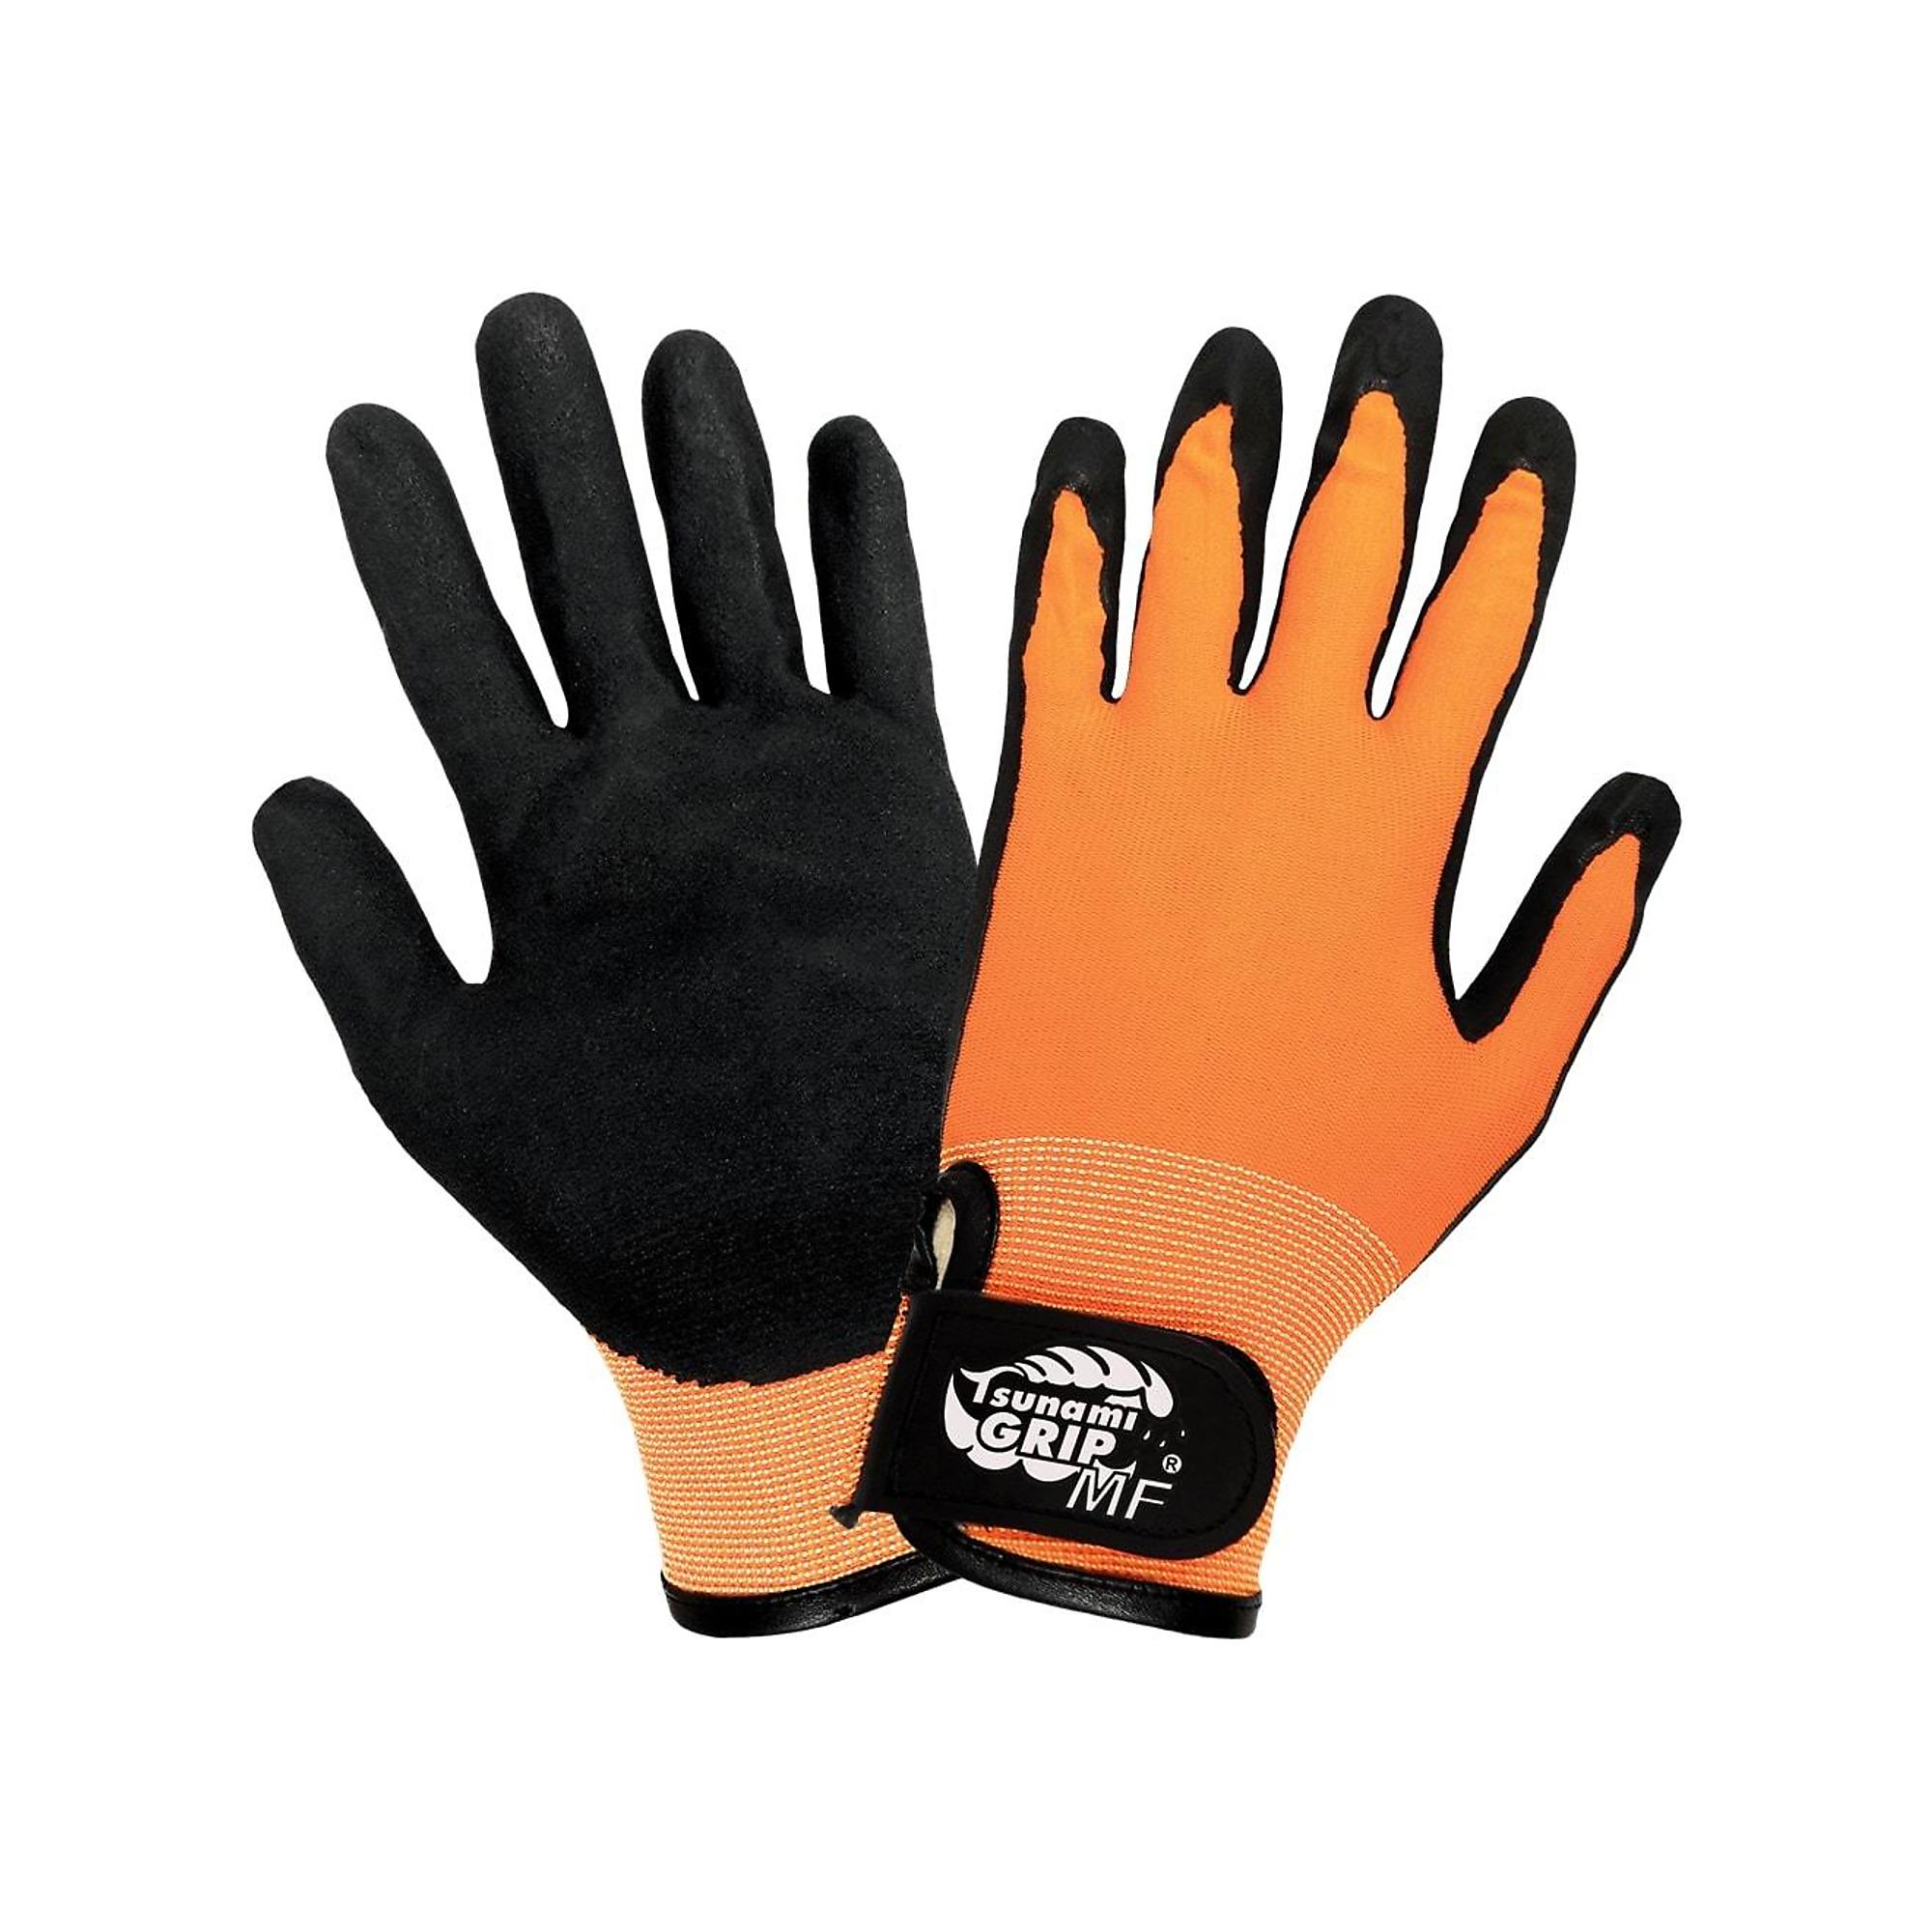 Global Glove Tsunami Grip , MF HV Mach Finish Nitrile Palm Coated Gloves, Size L, Color High-Visibility Orange/Black, Included (qty.) 12 Model 510MFV-